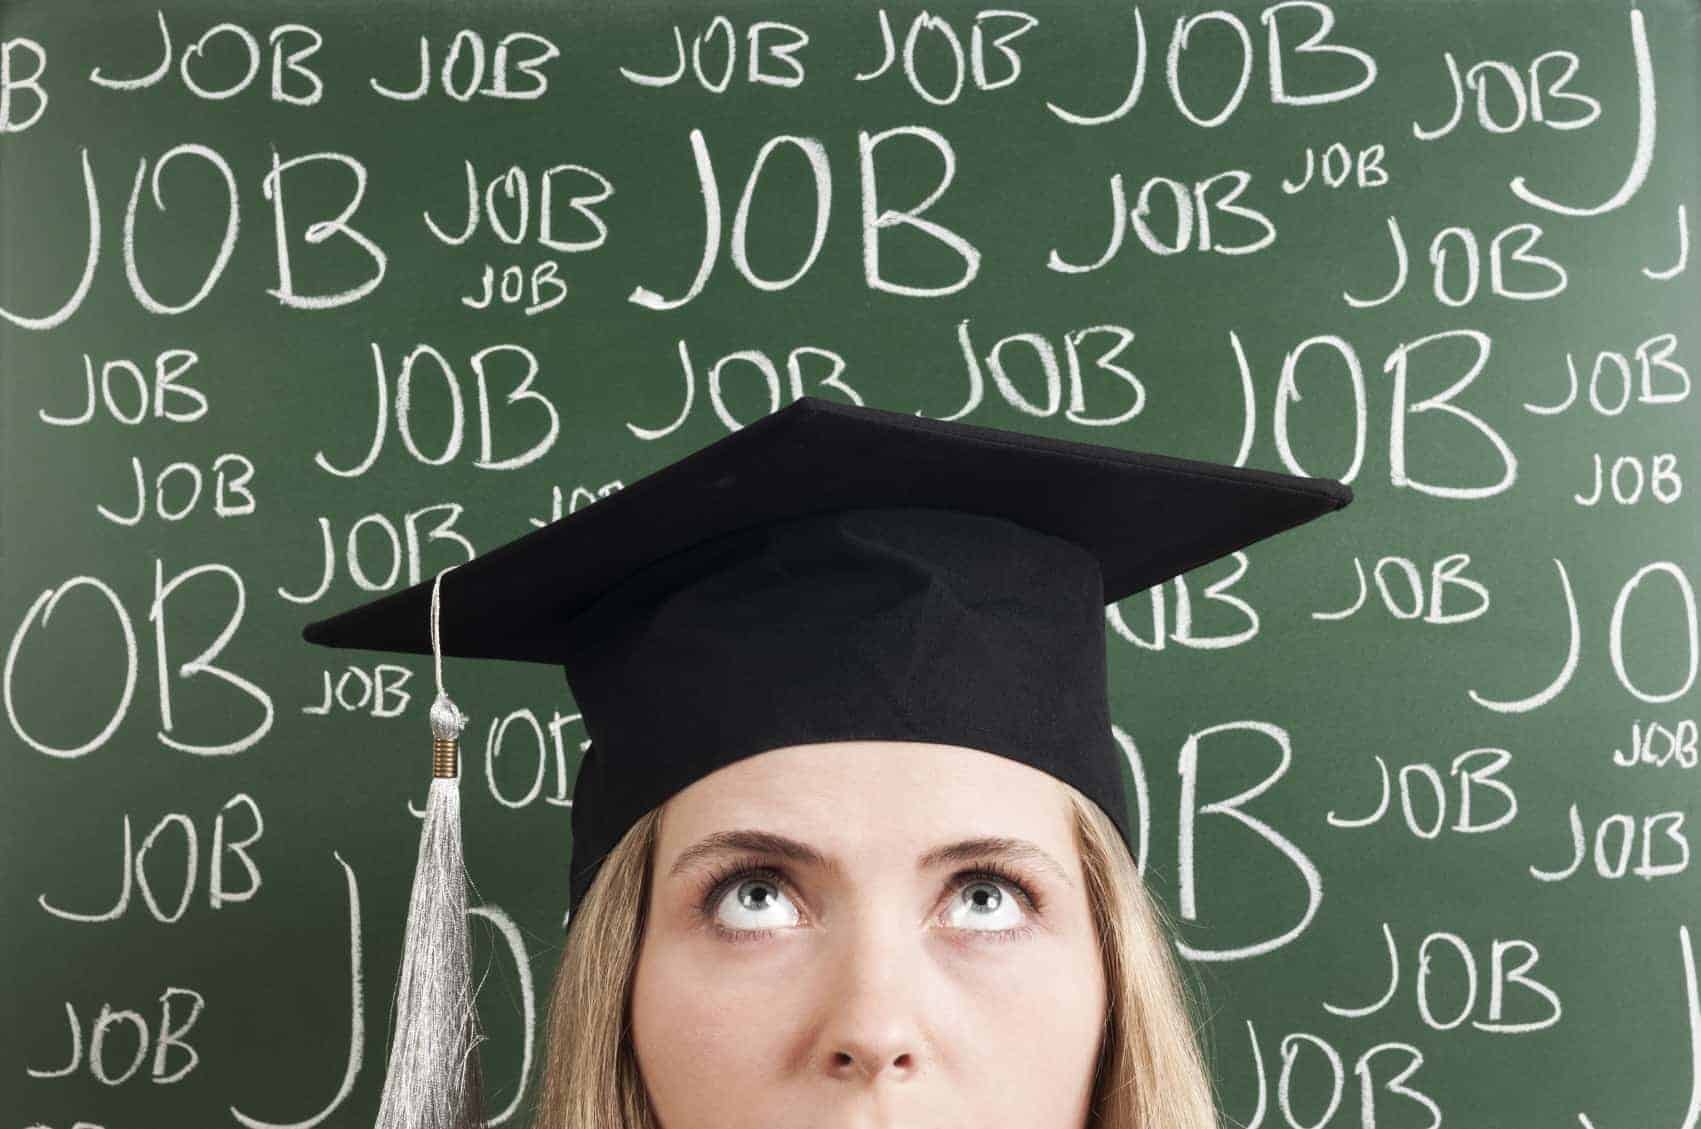 Graduate thinking about job options